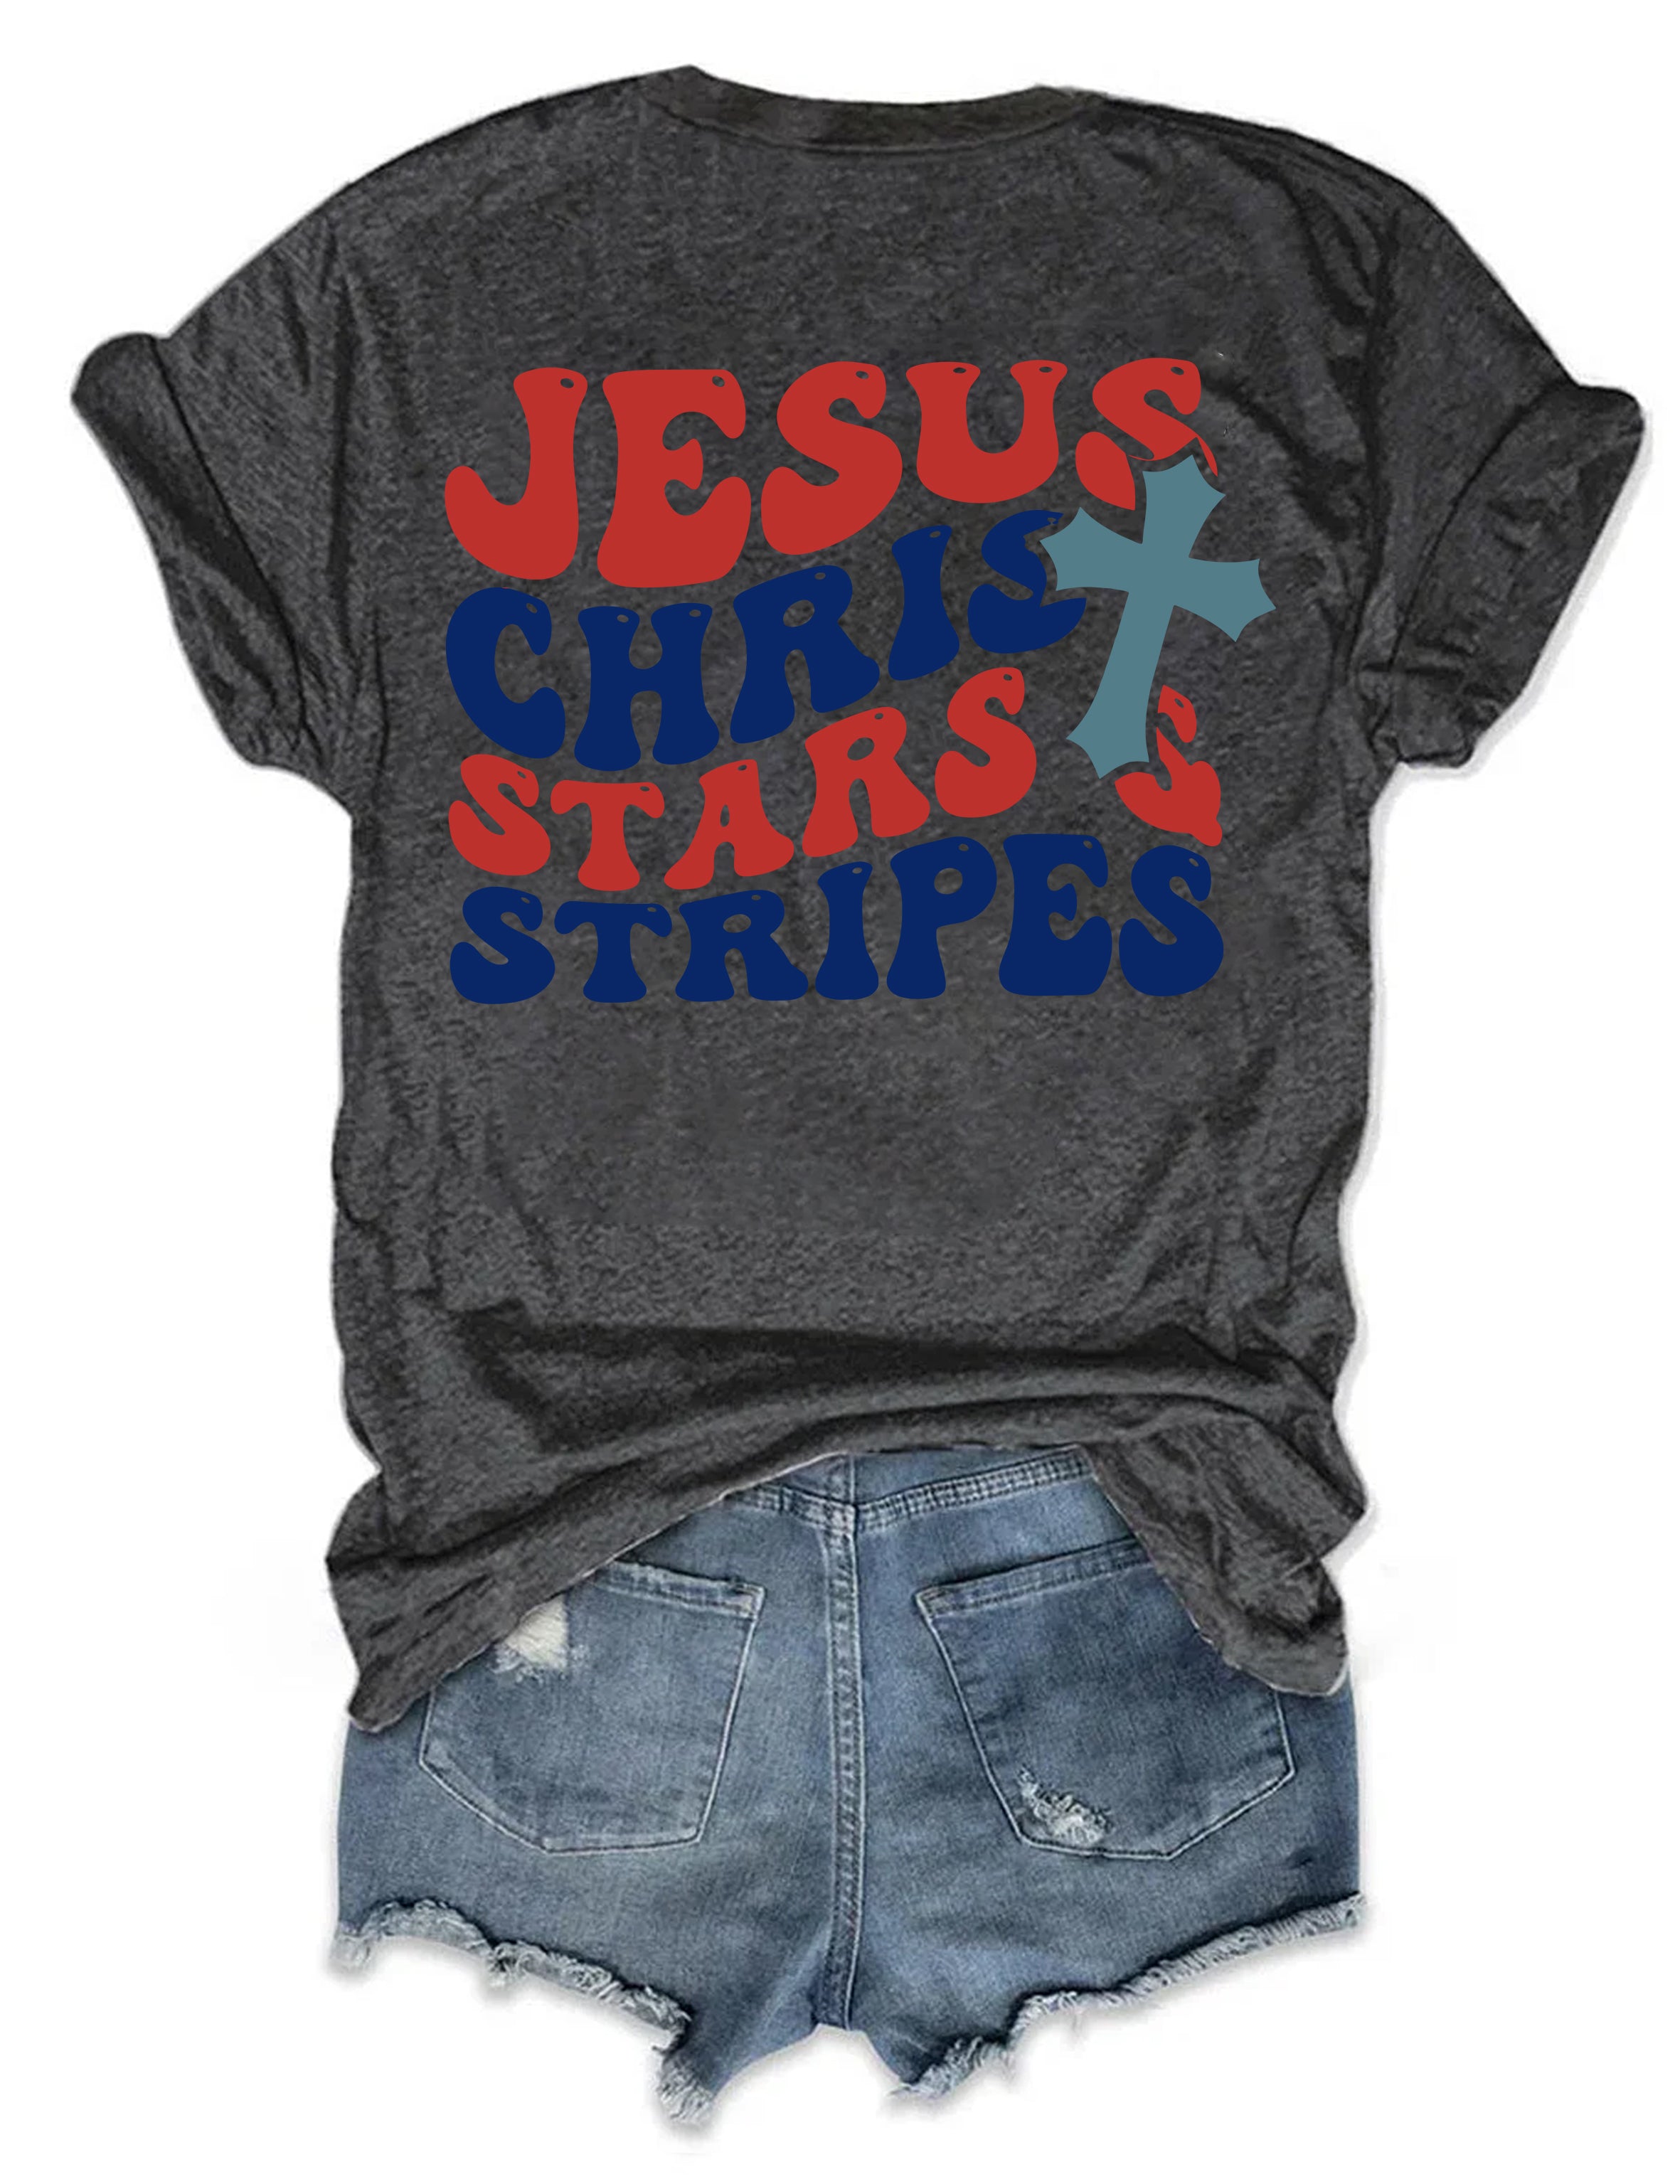 Jesus Christ Stars & Stripes T-shirt